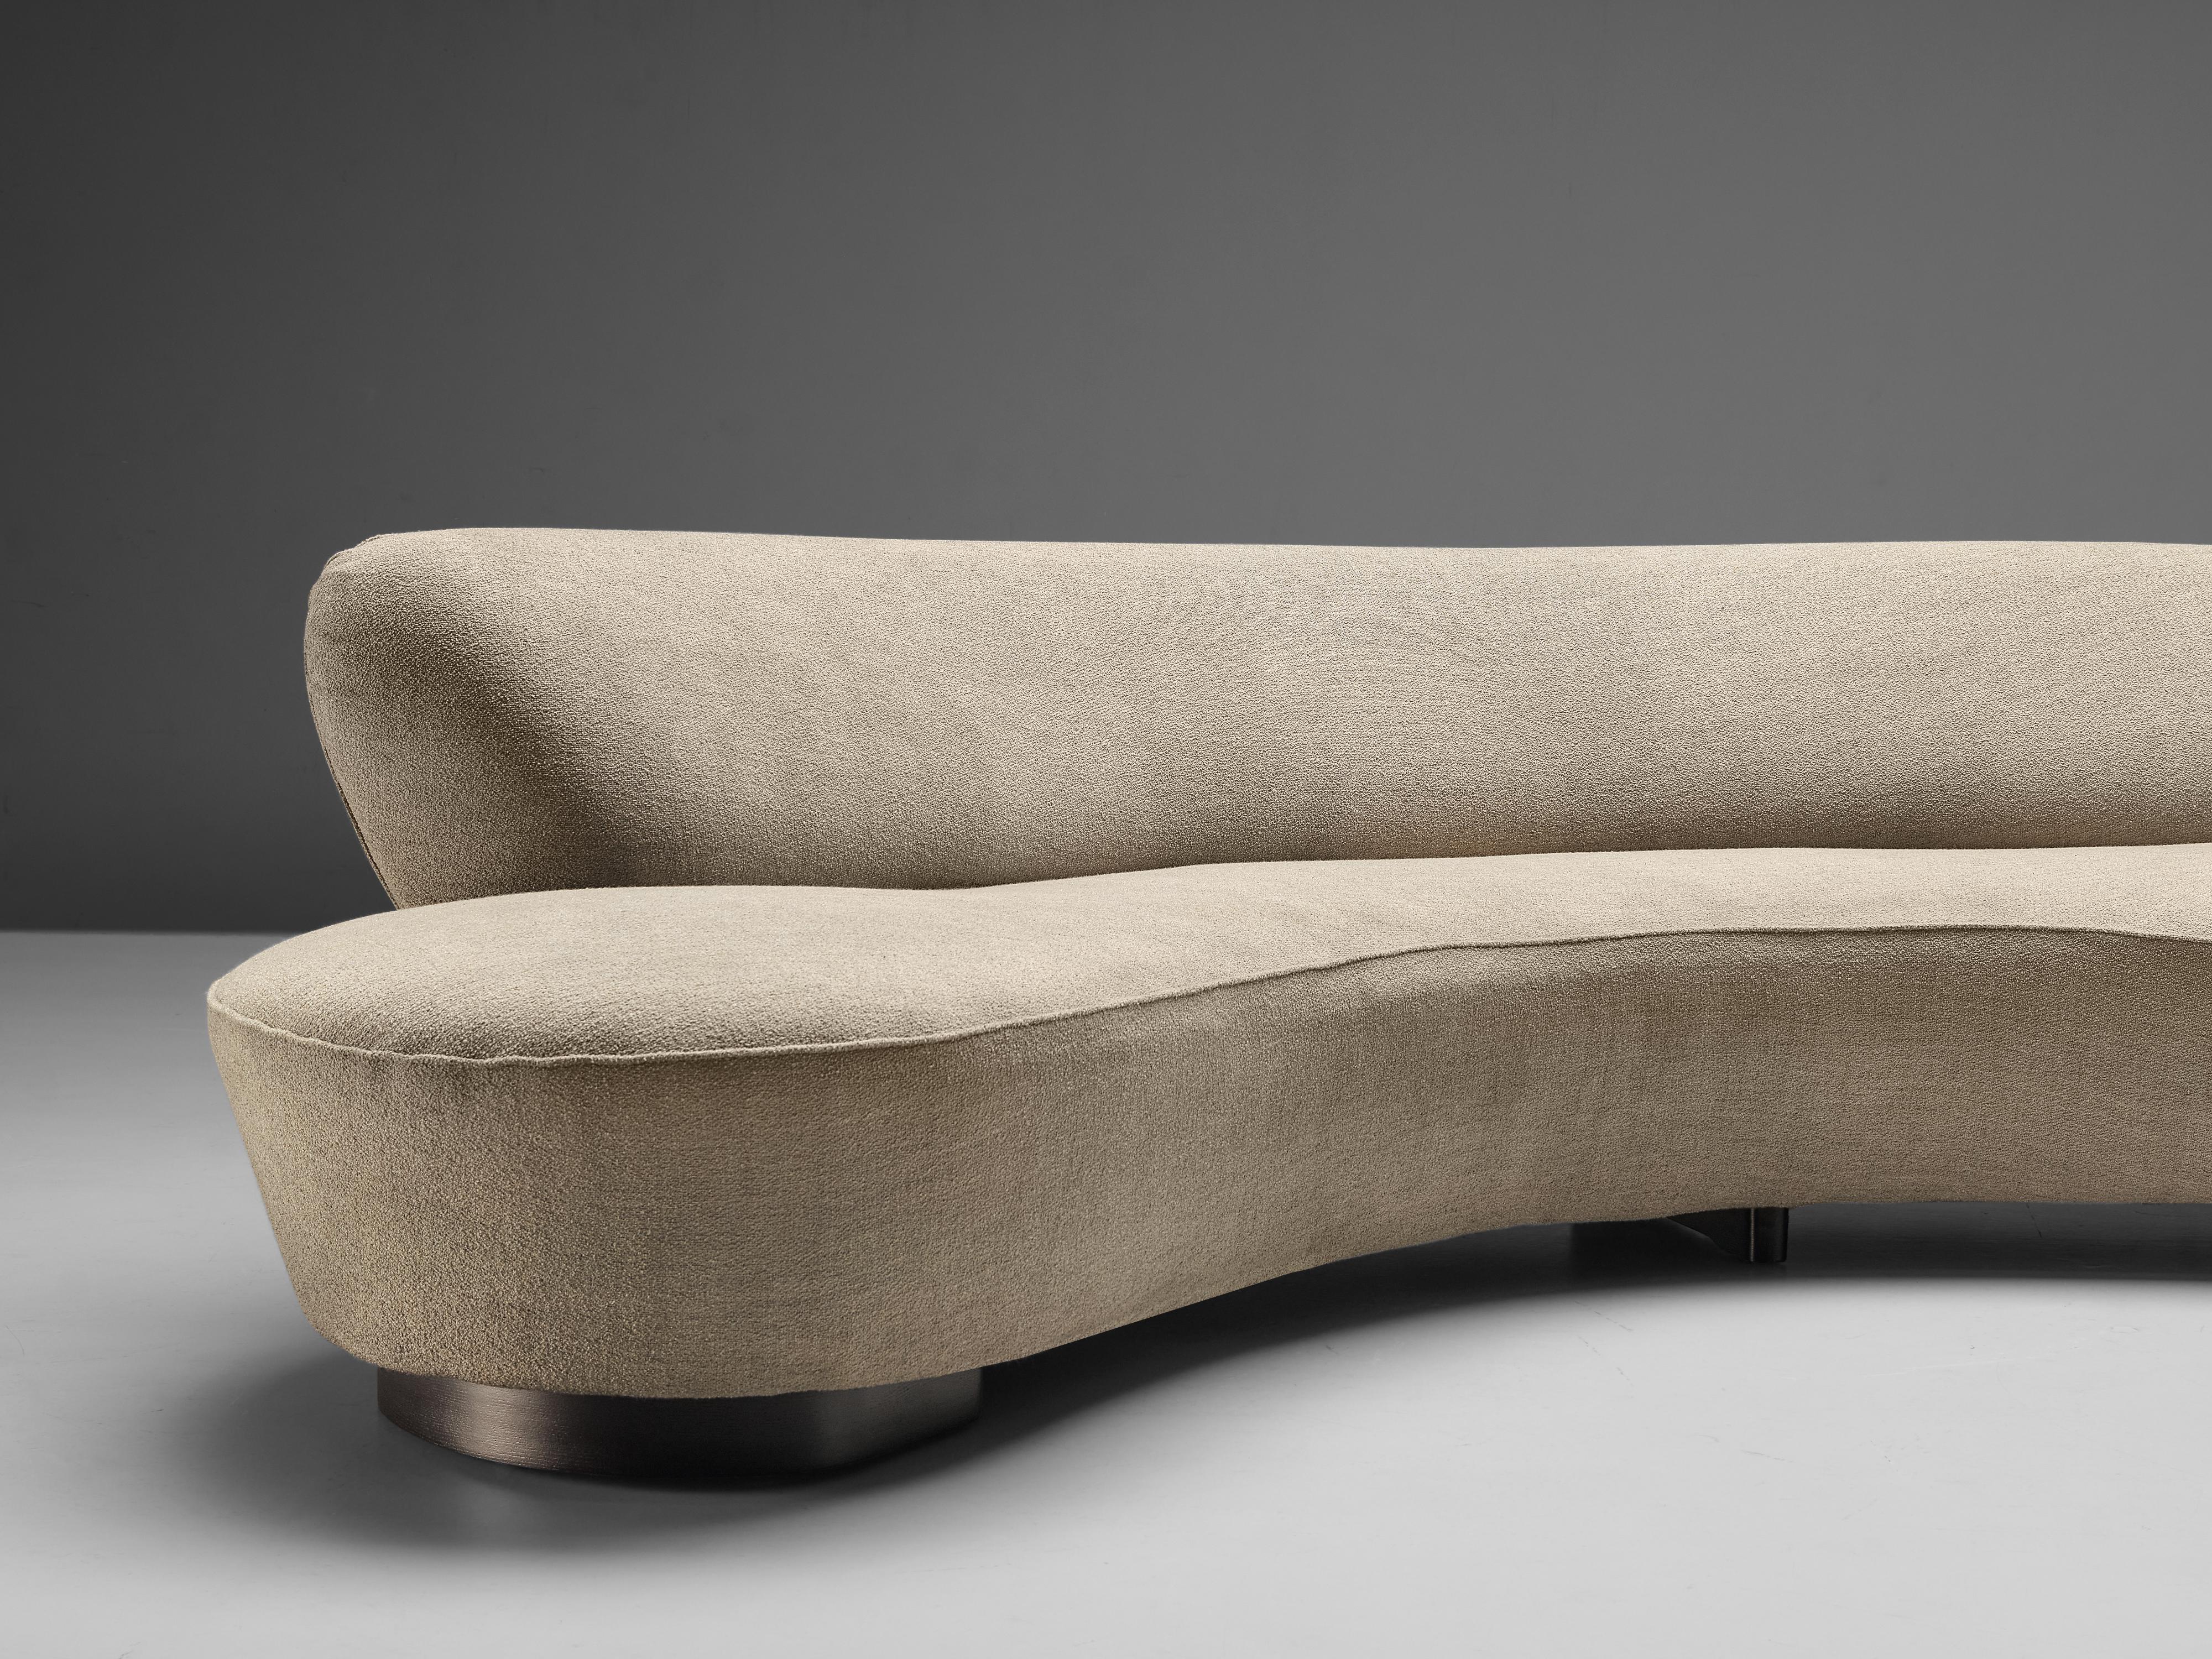 Iconic Vladimir Kagan 'Serpentine' Sofa in Off-White Upholstery 1